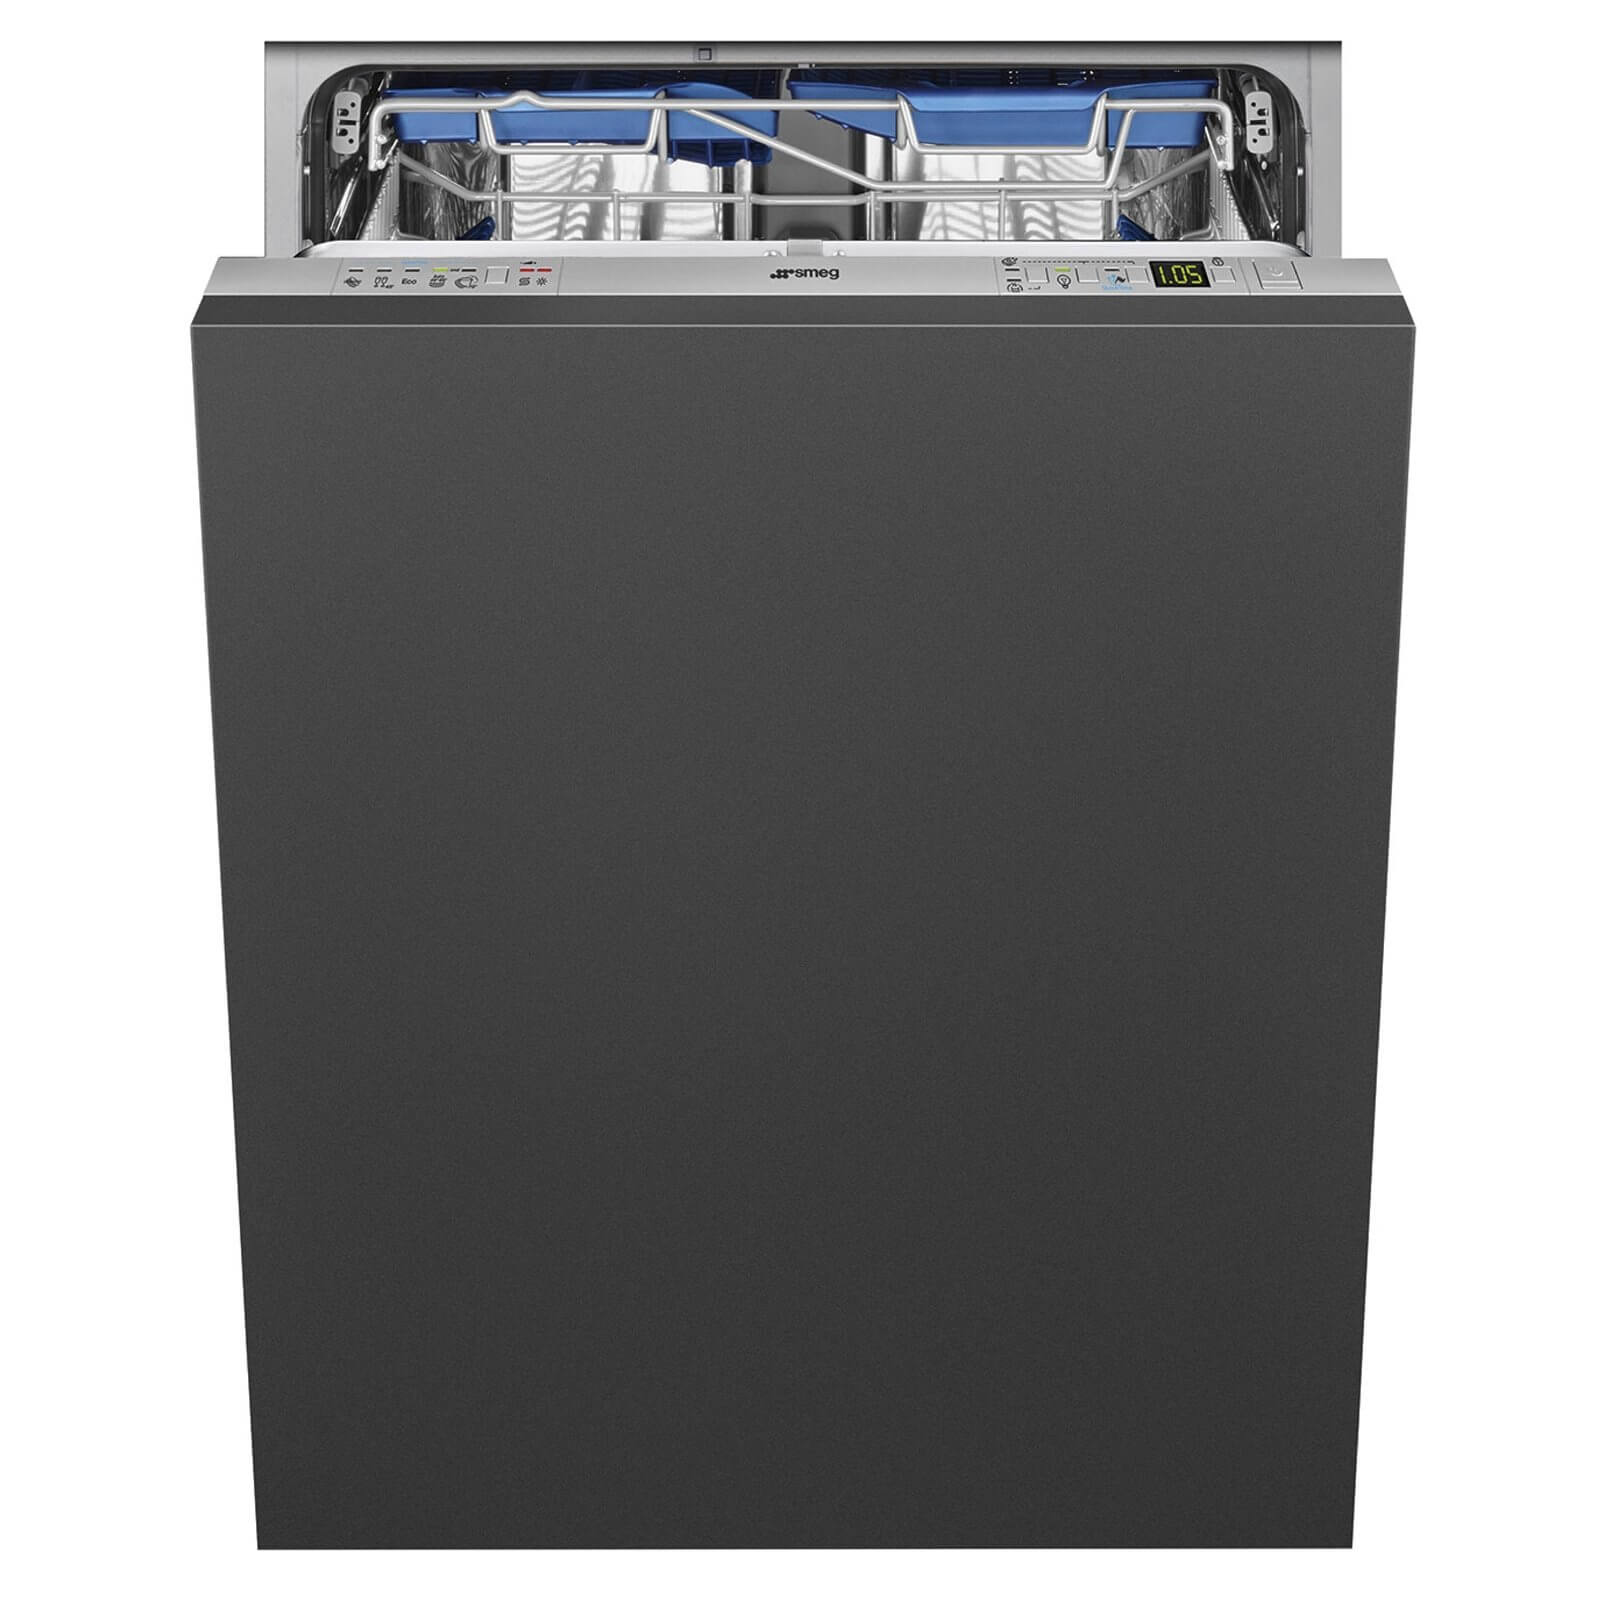 Smeg DI13TF3 60cm Fully Integrated Dishwasher